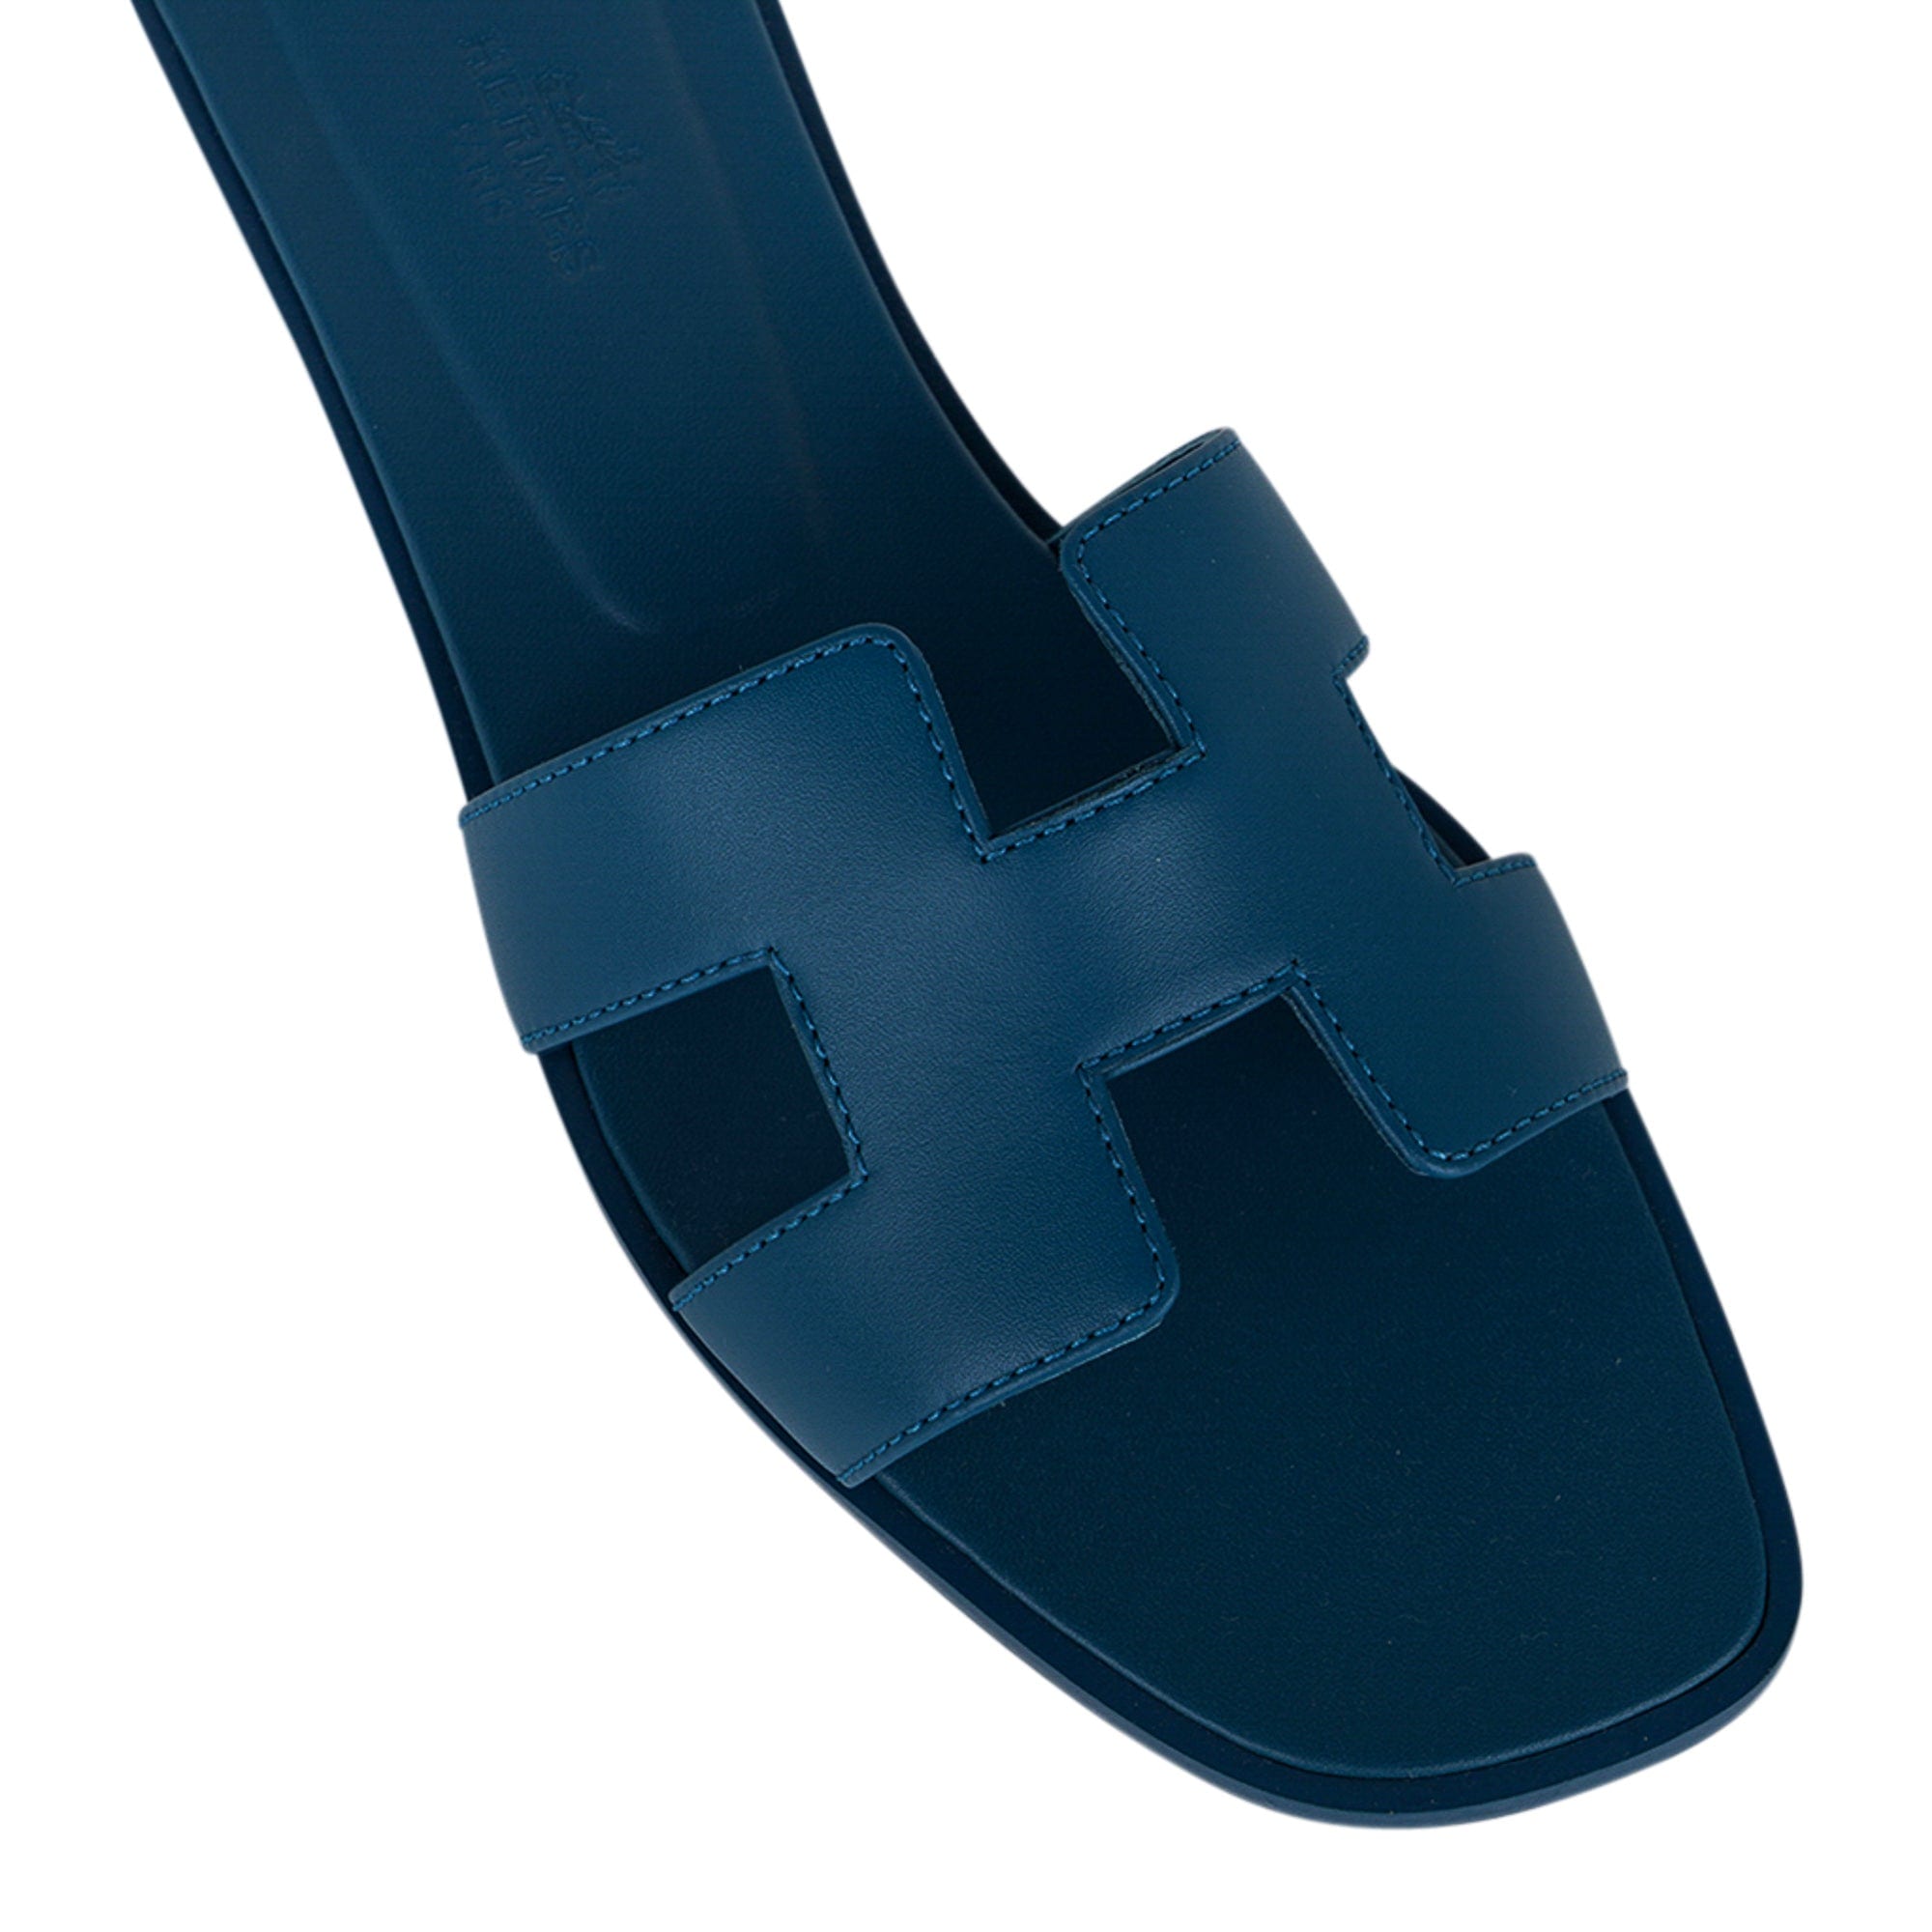 H*ermes Oran Sandals in Dark Blue 37, Women's Fashion, Footwear